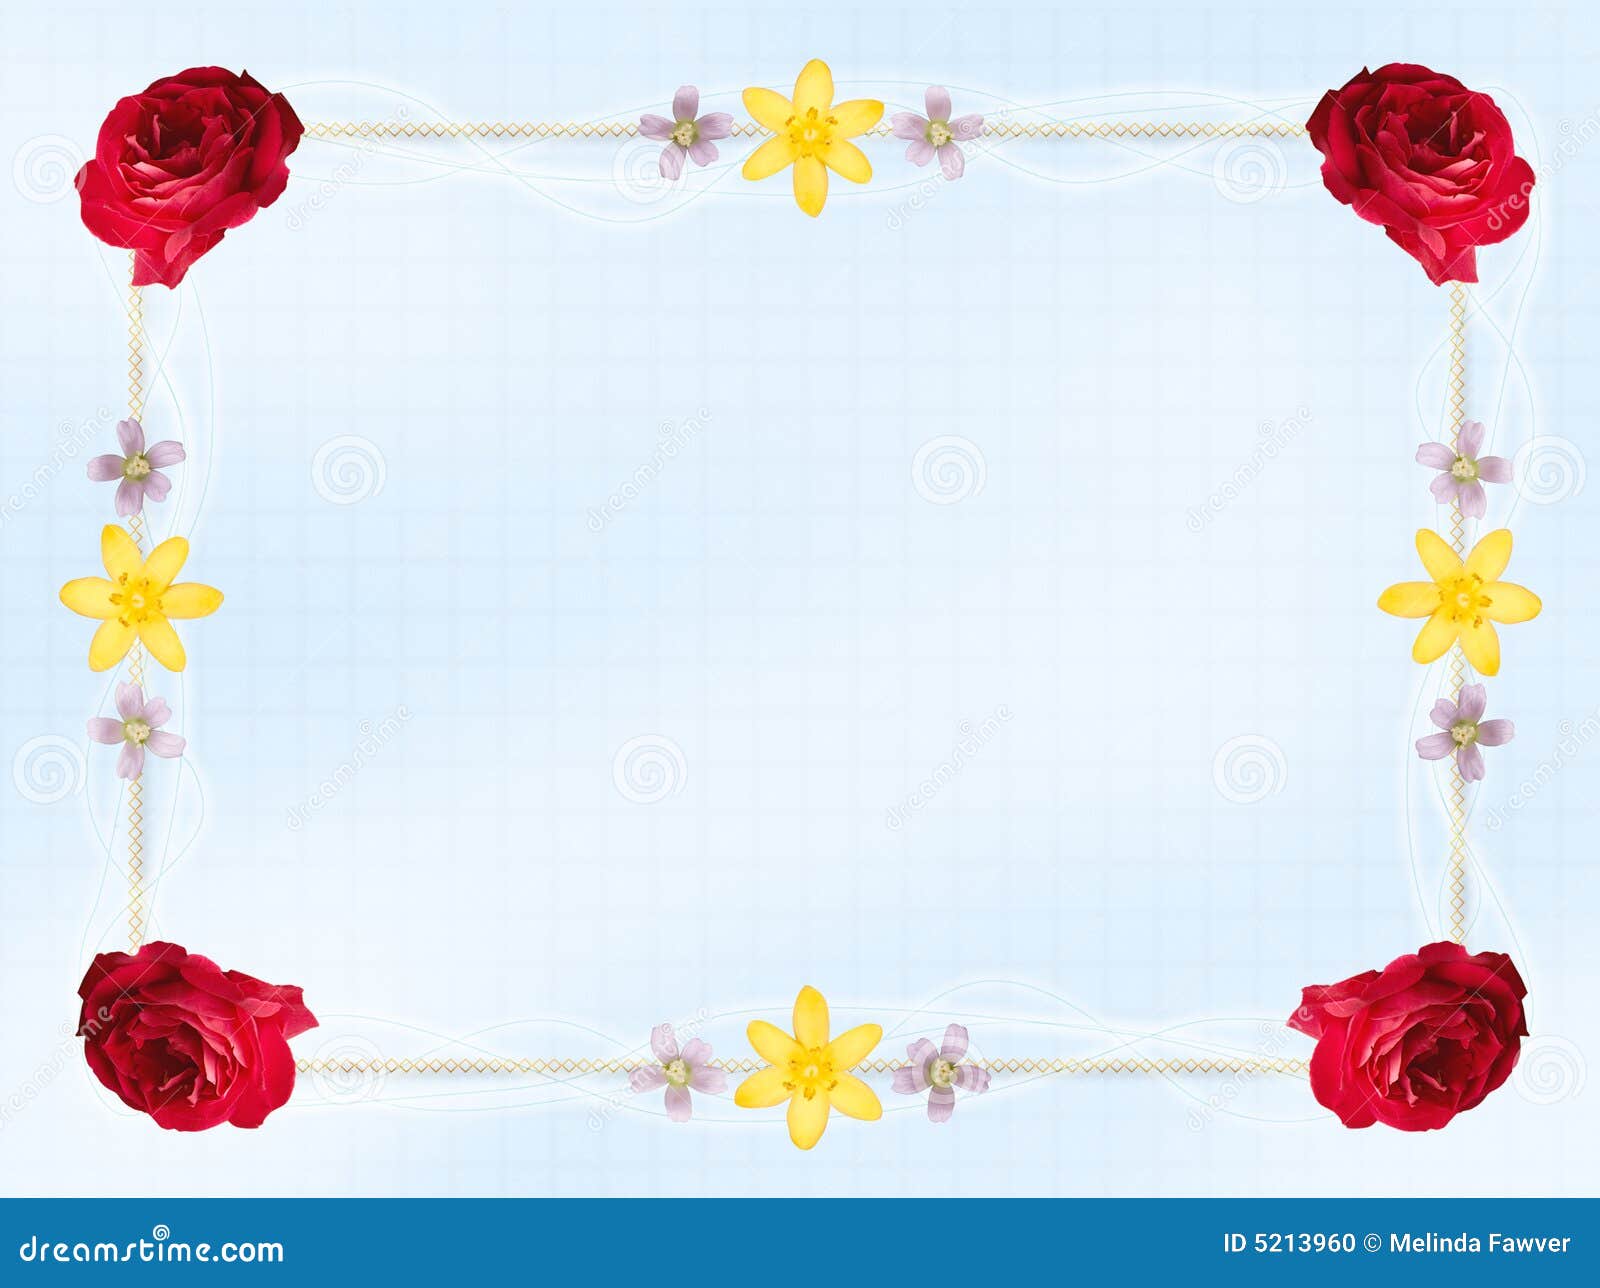 Flower Card Border Stock Photo - Image: 5213960